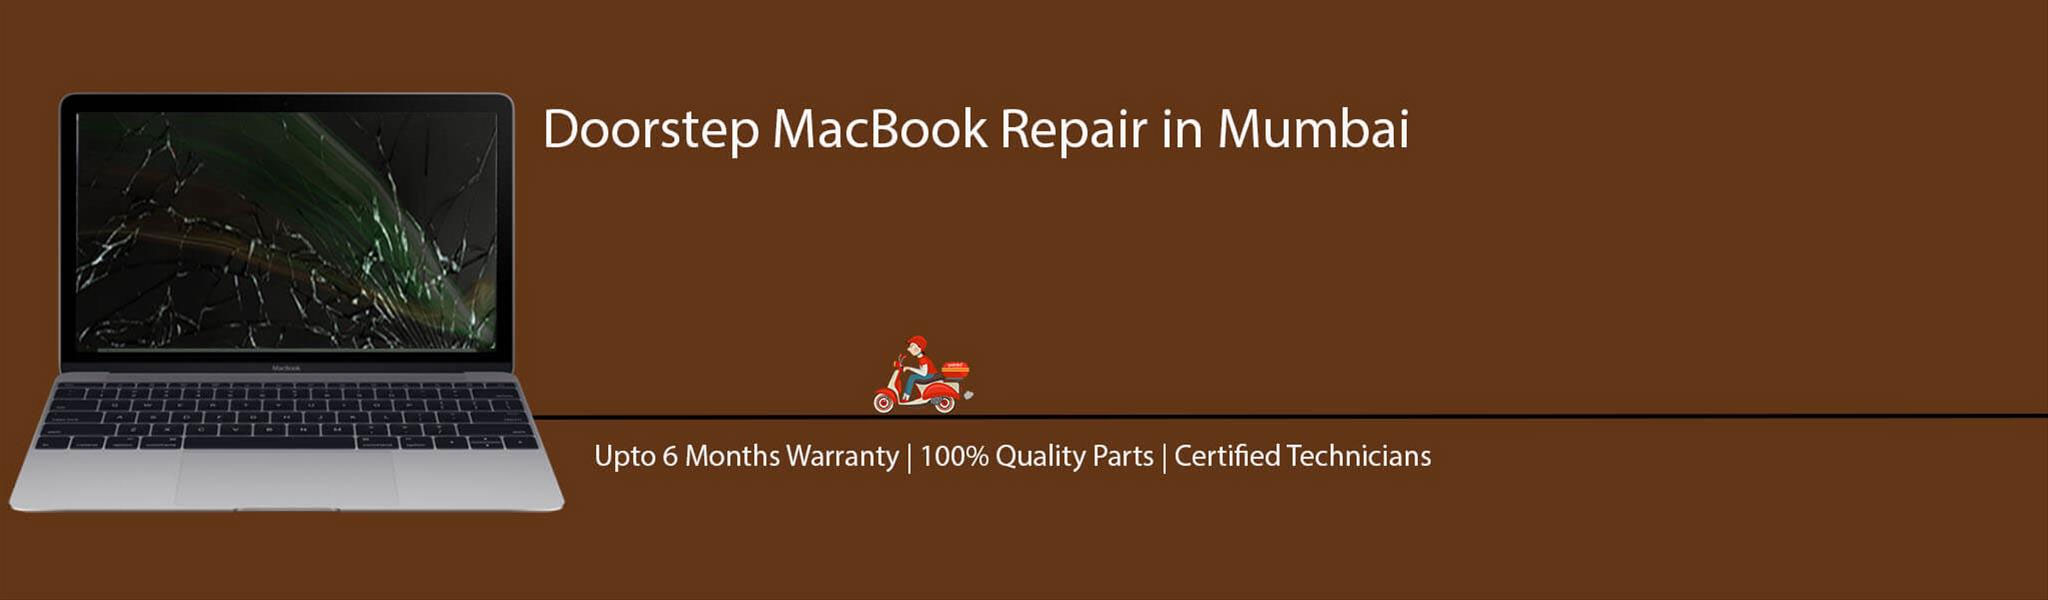 macbook-laptop-banner-mumbai.jpg